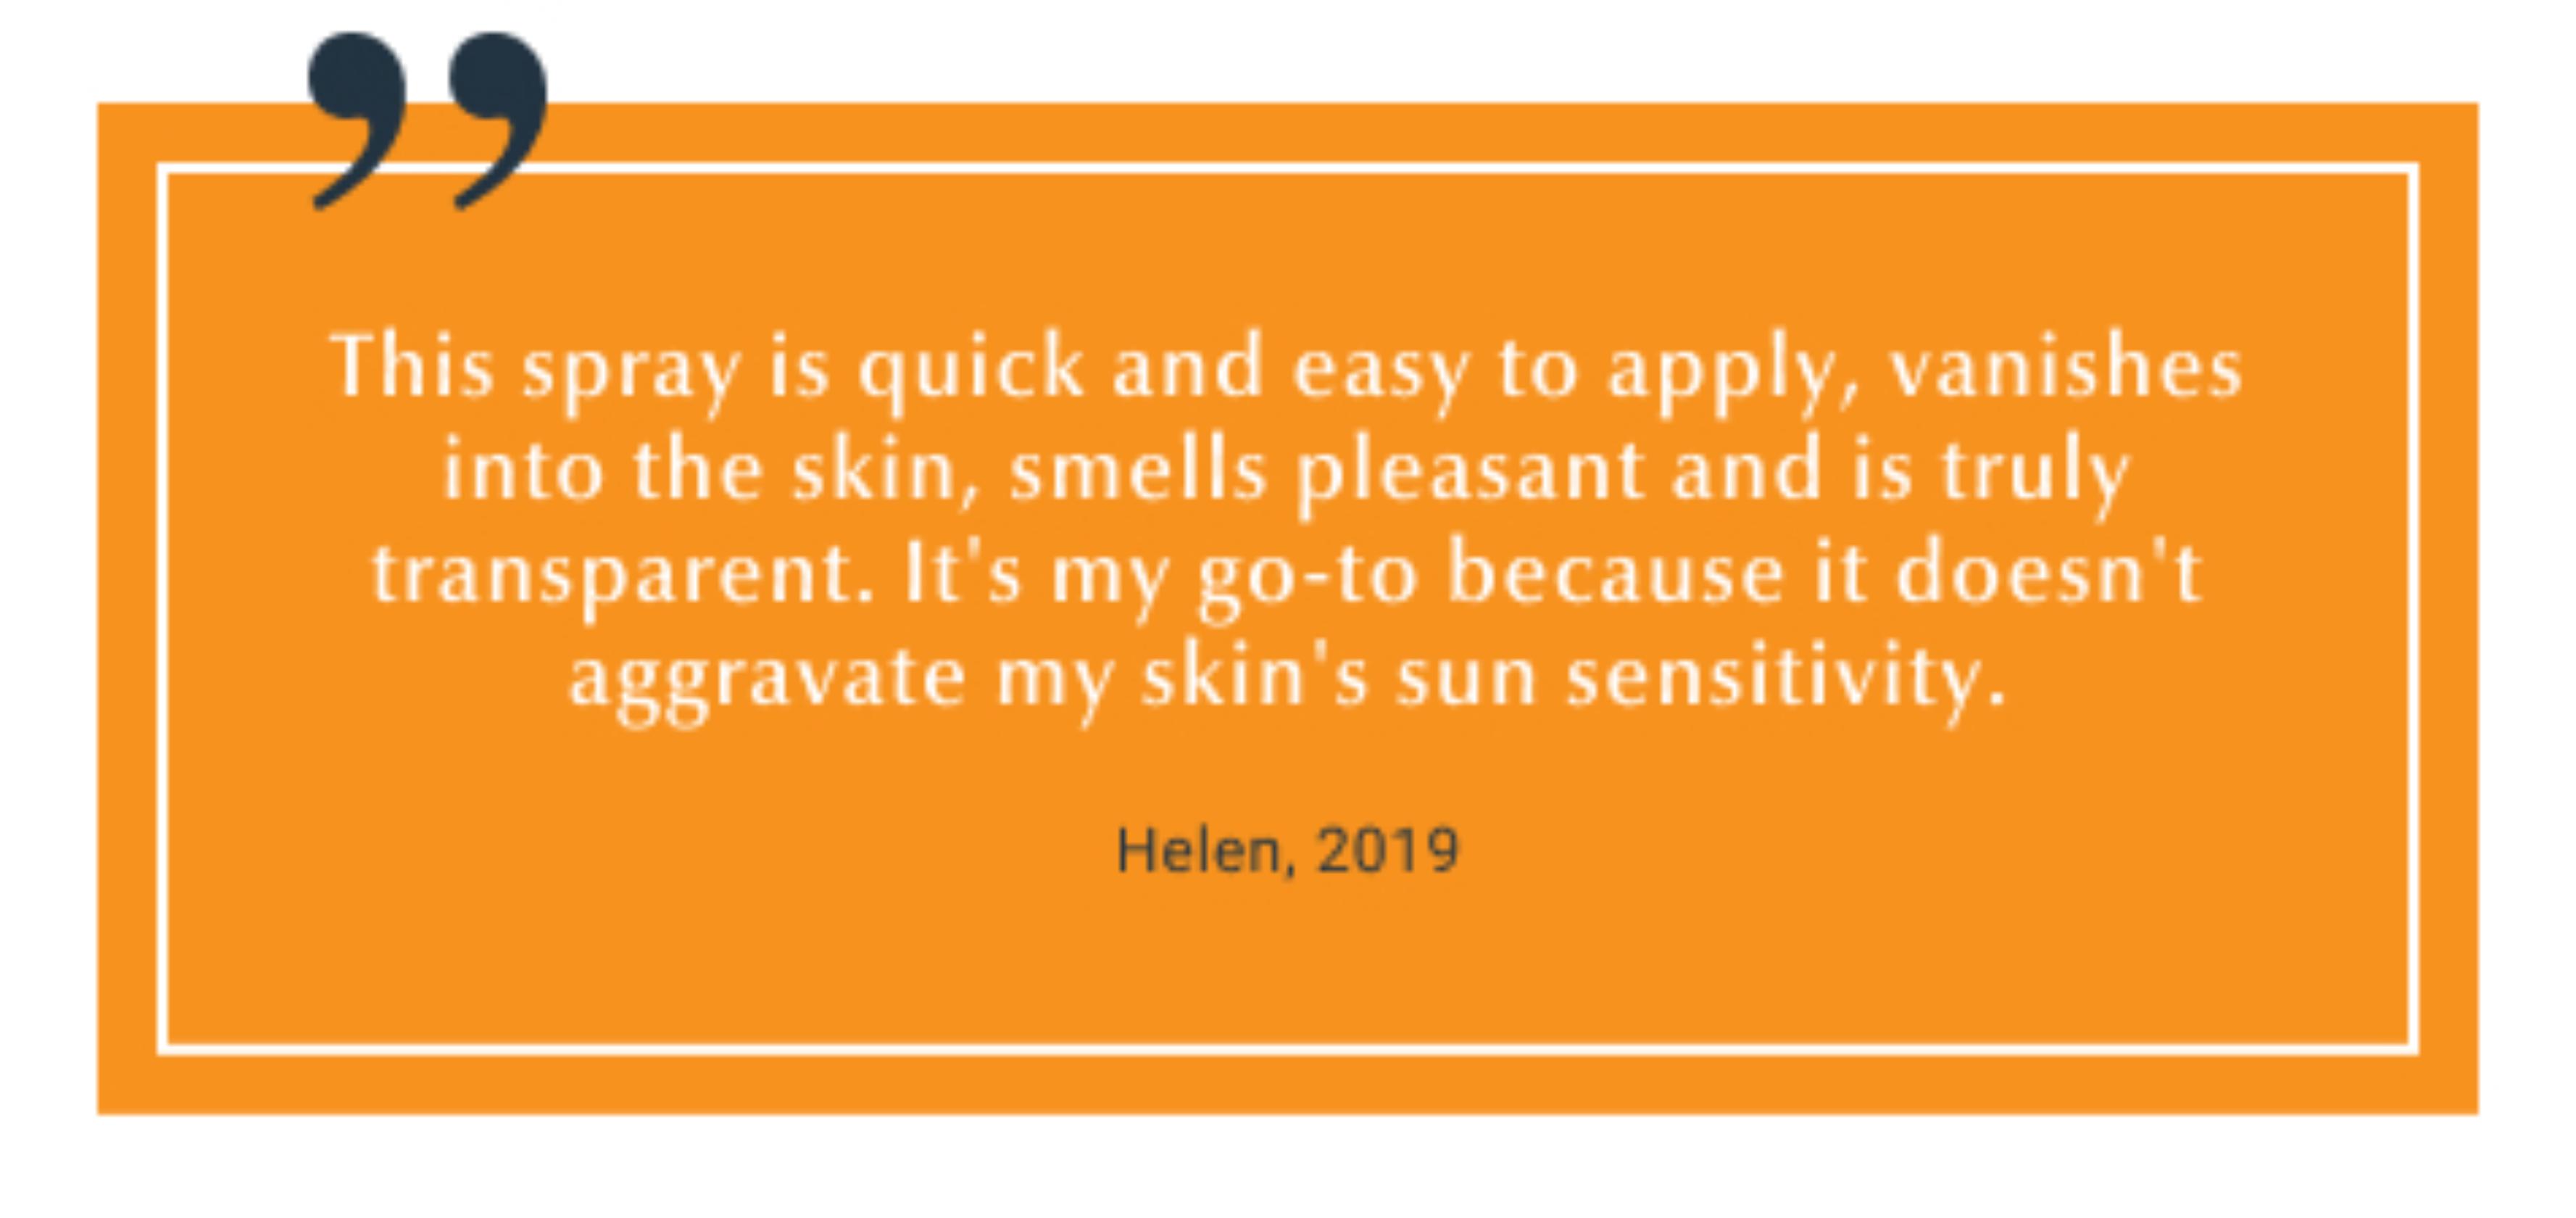 Eucerin Sun Sensitive Protect Spray Dry Touch Transparent SPF50 200ml